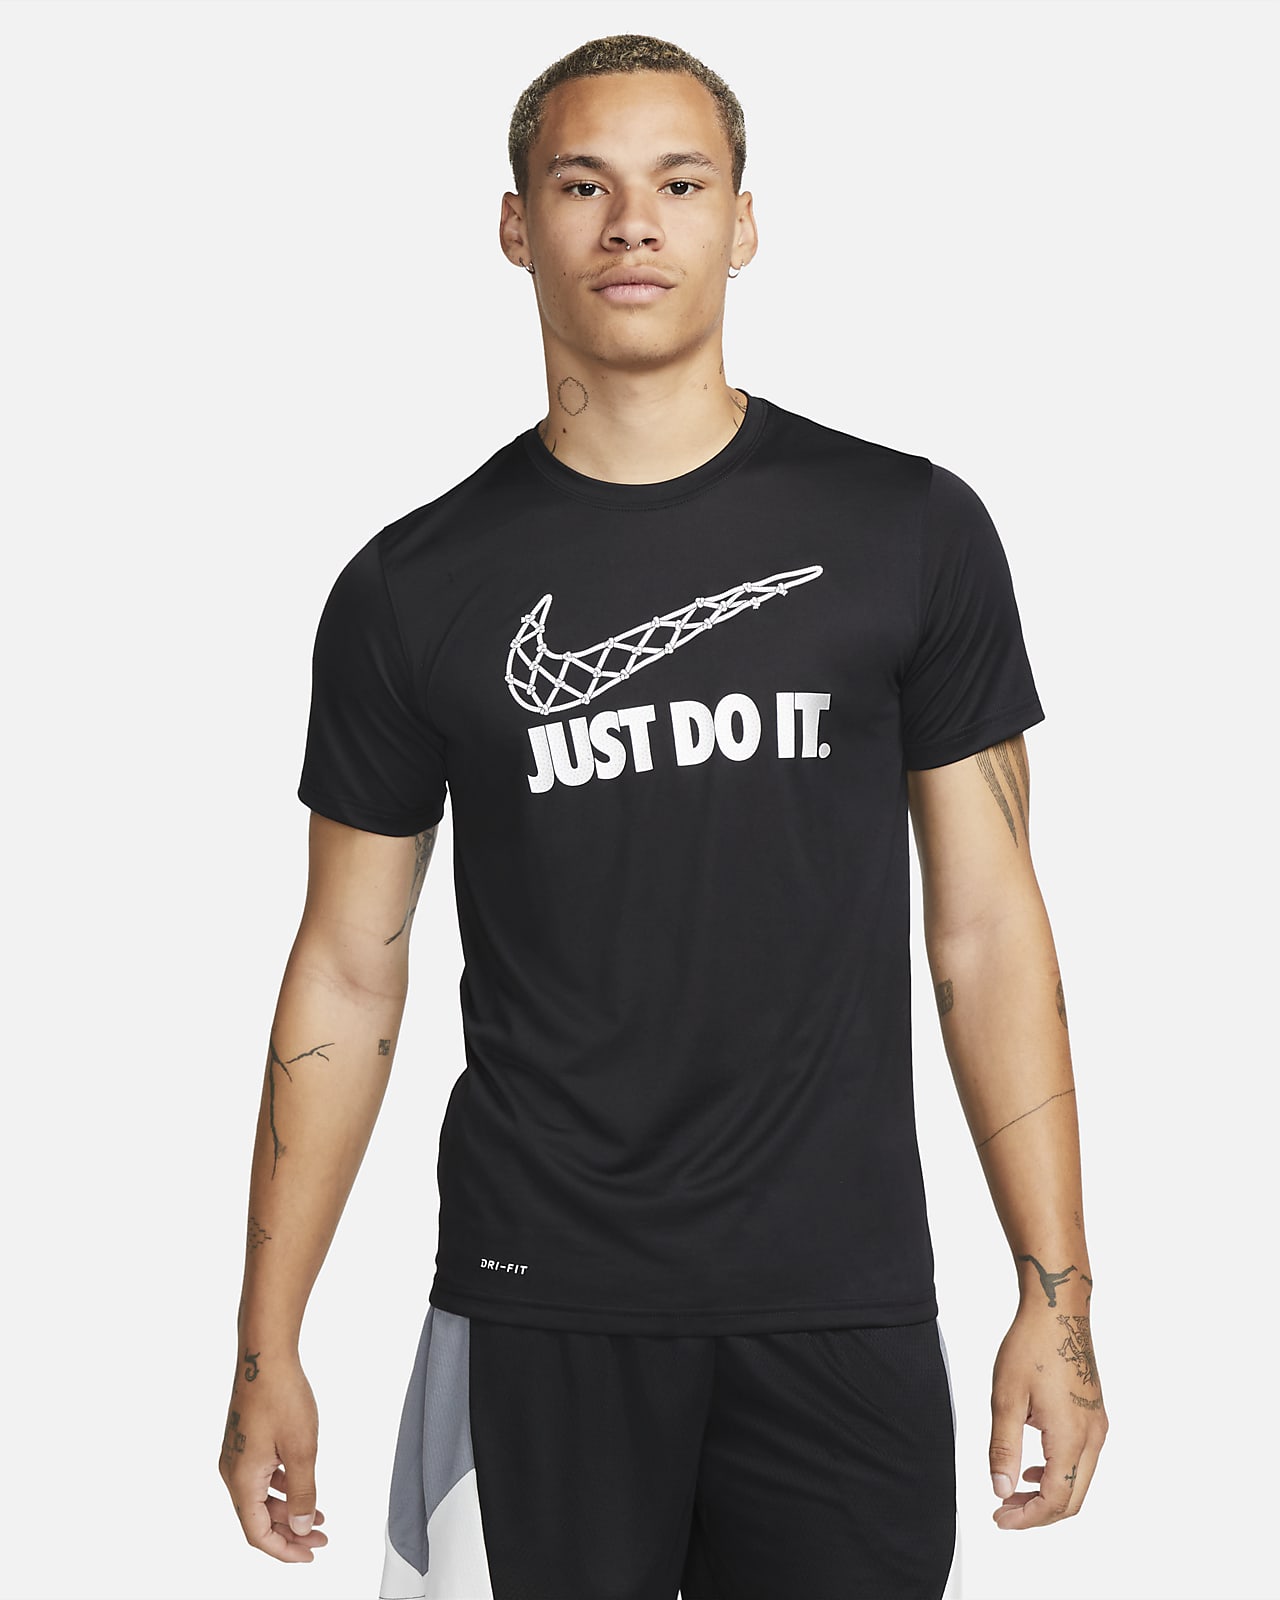 Nike Dri-FIT "Just Do It." Men's Basketball T-Shirt